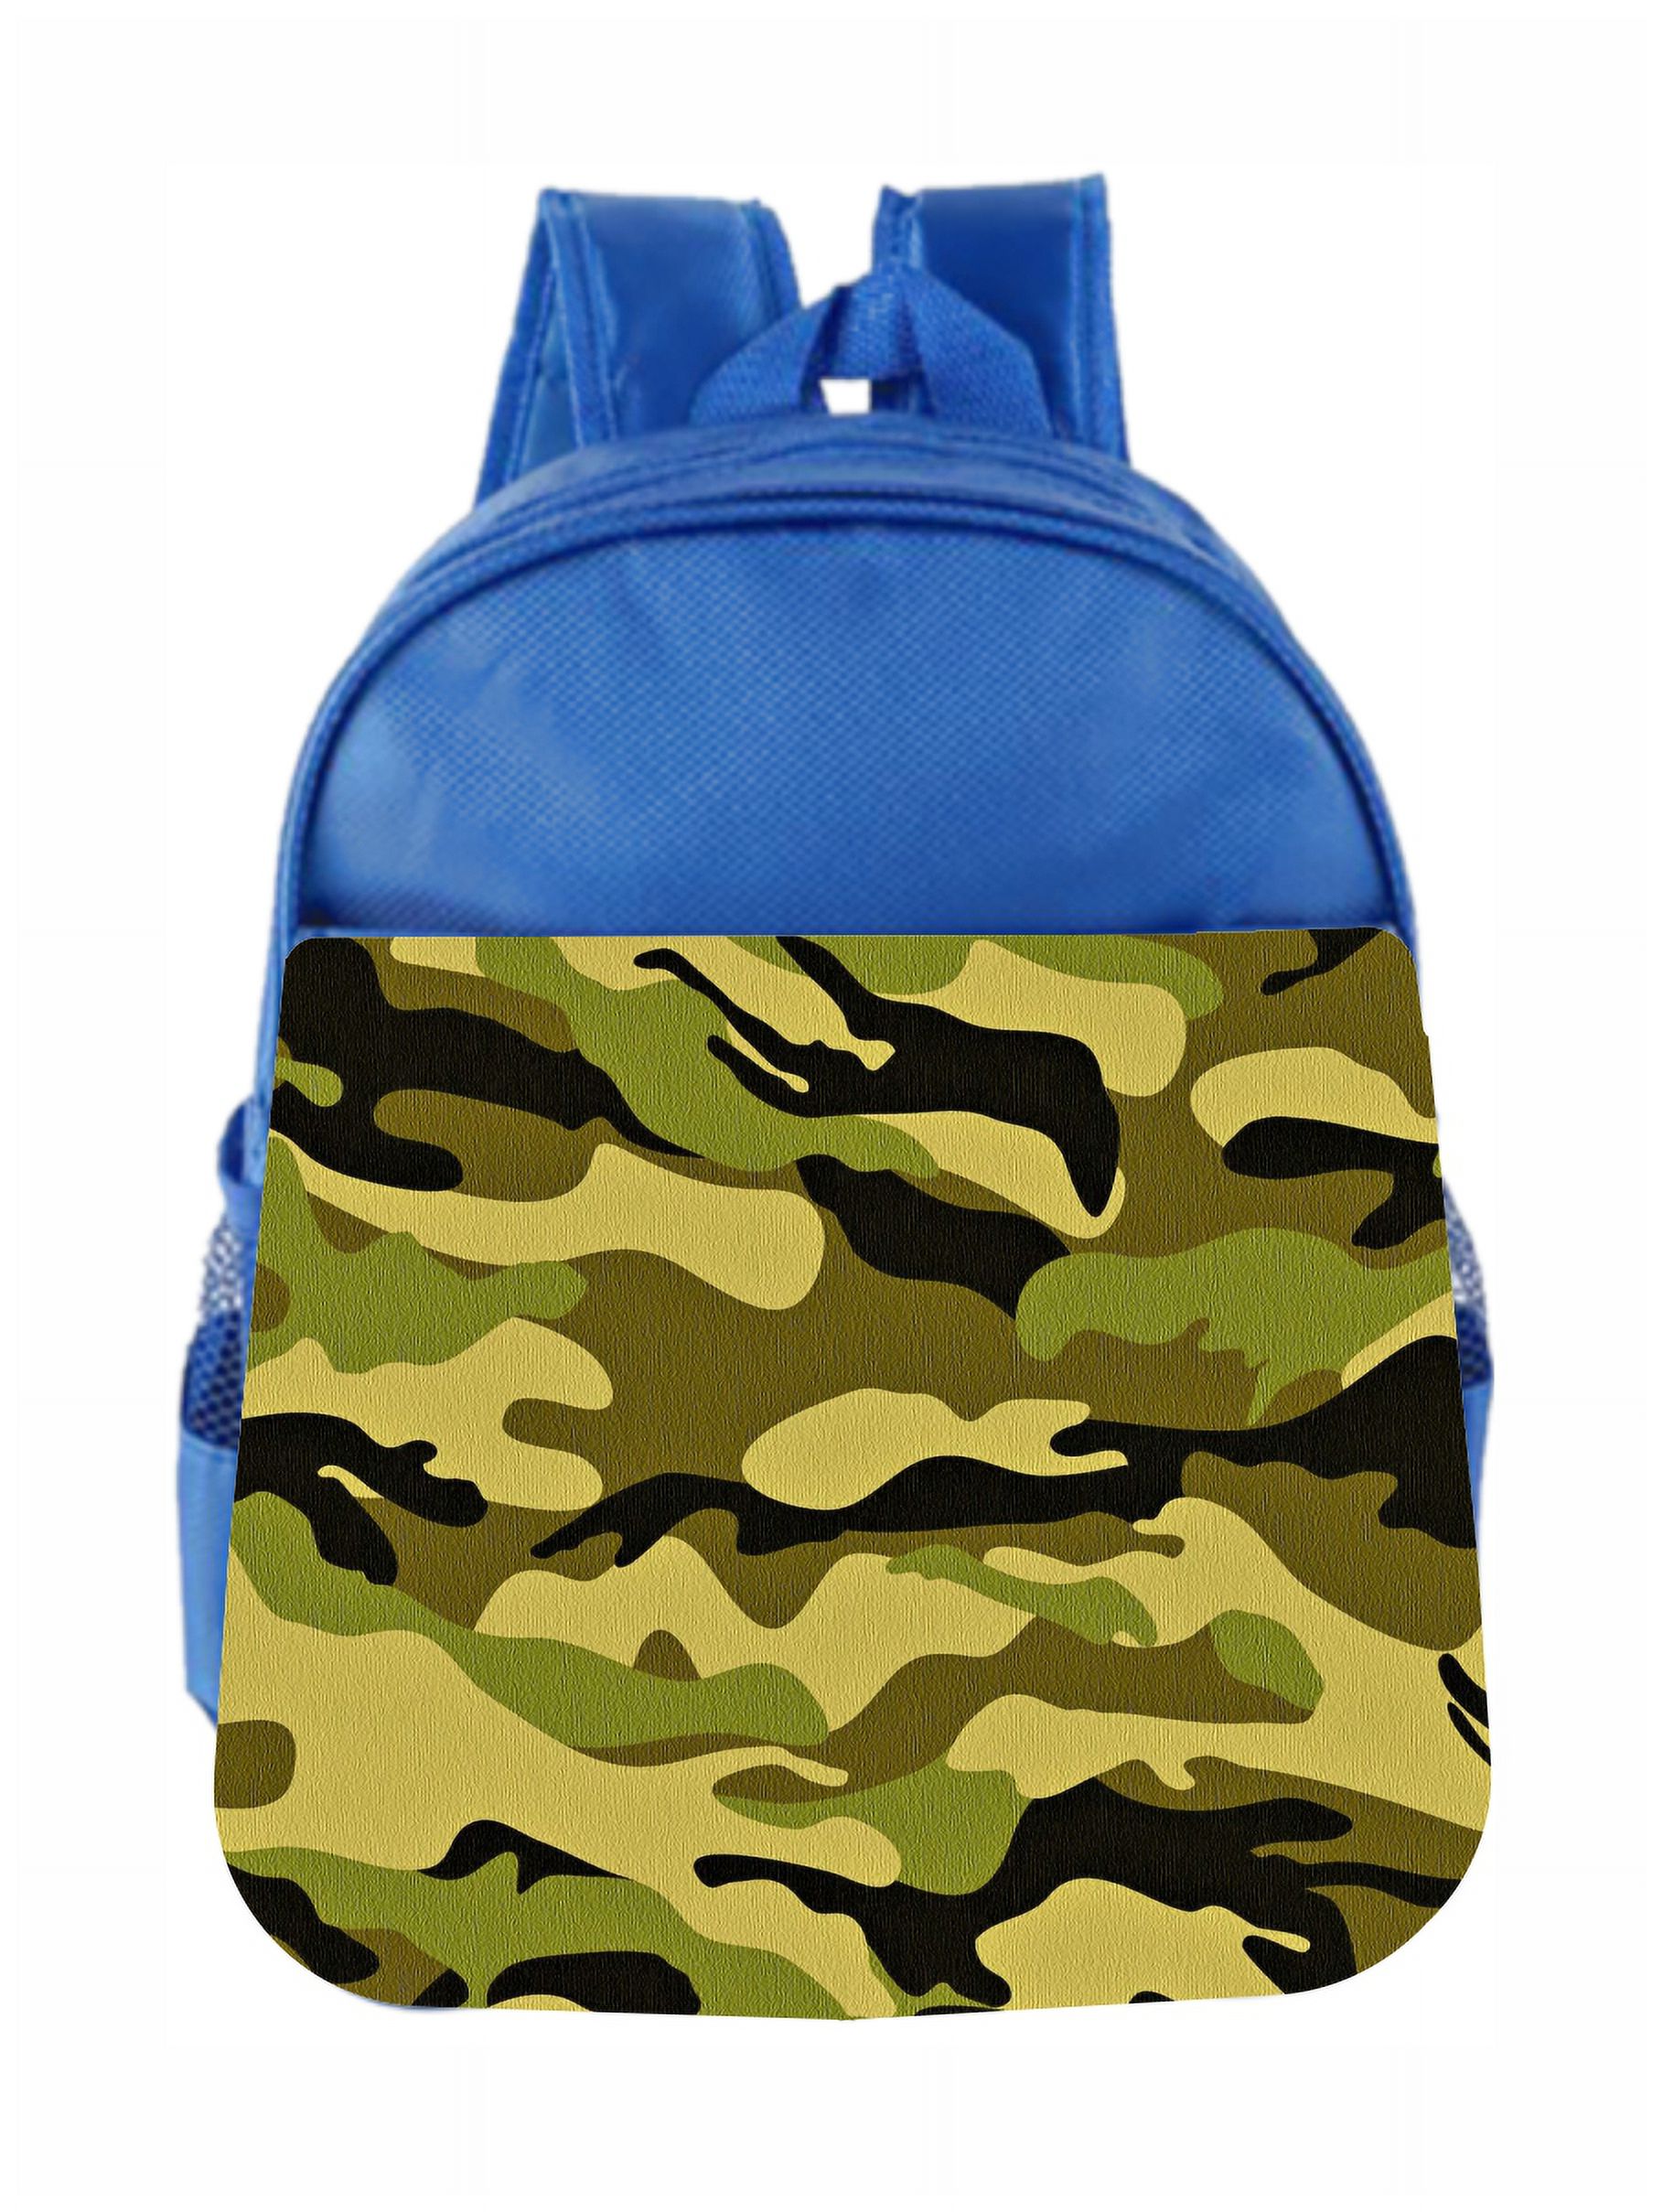 Preschool Backpack Camo Army Digital Kids Backpack Toddler - image 1 of 4